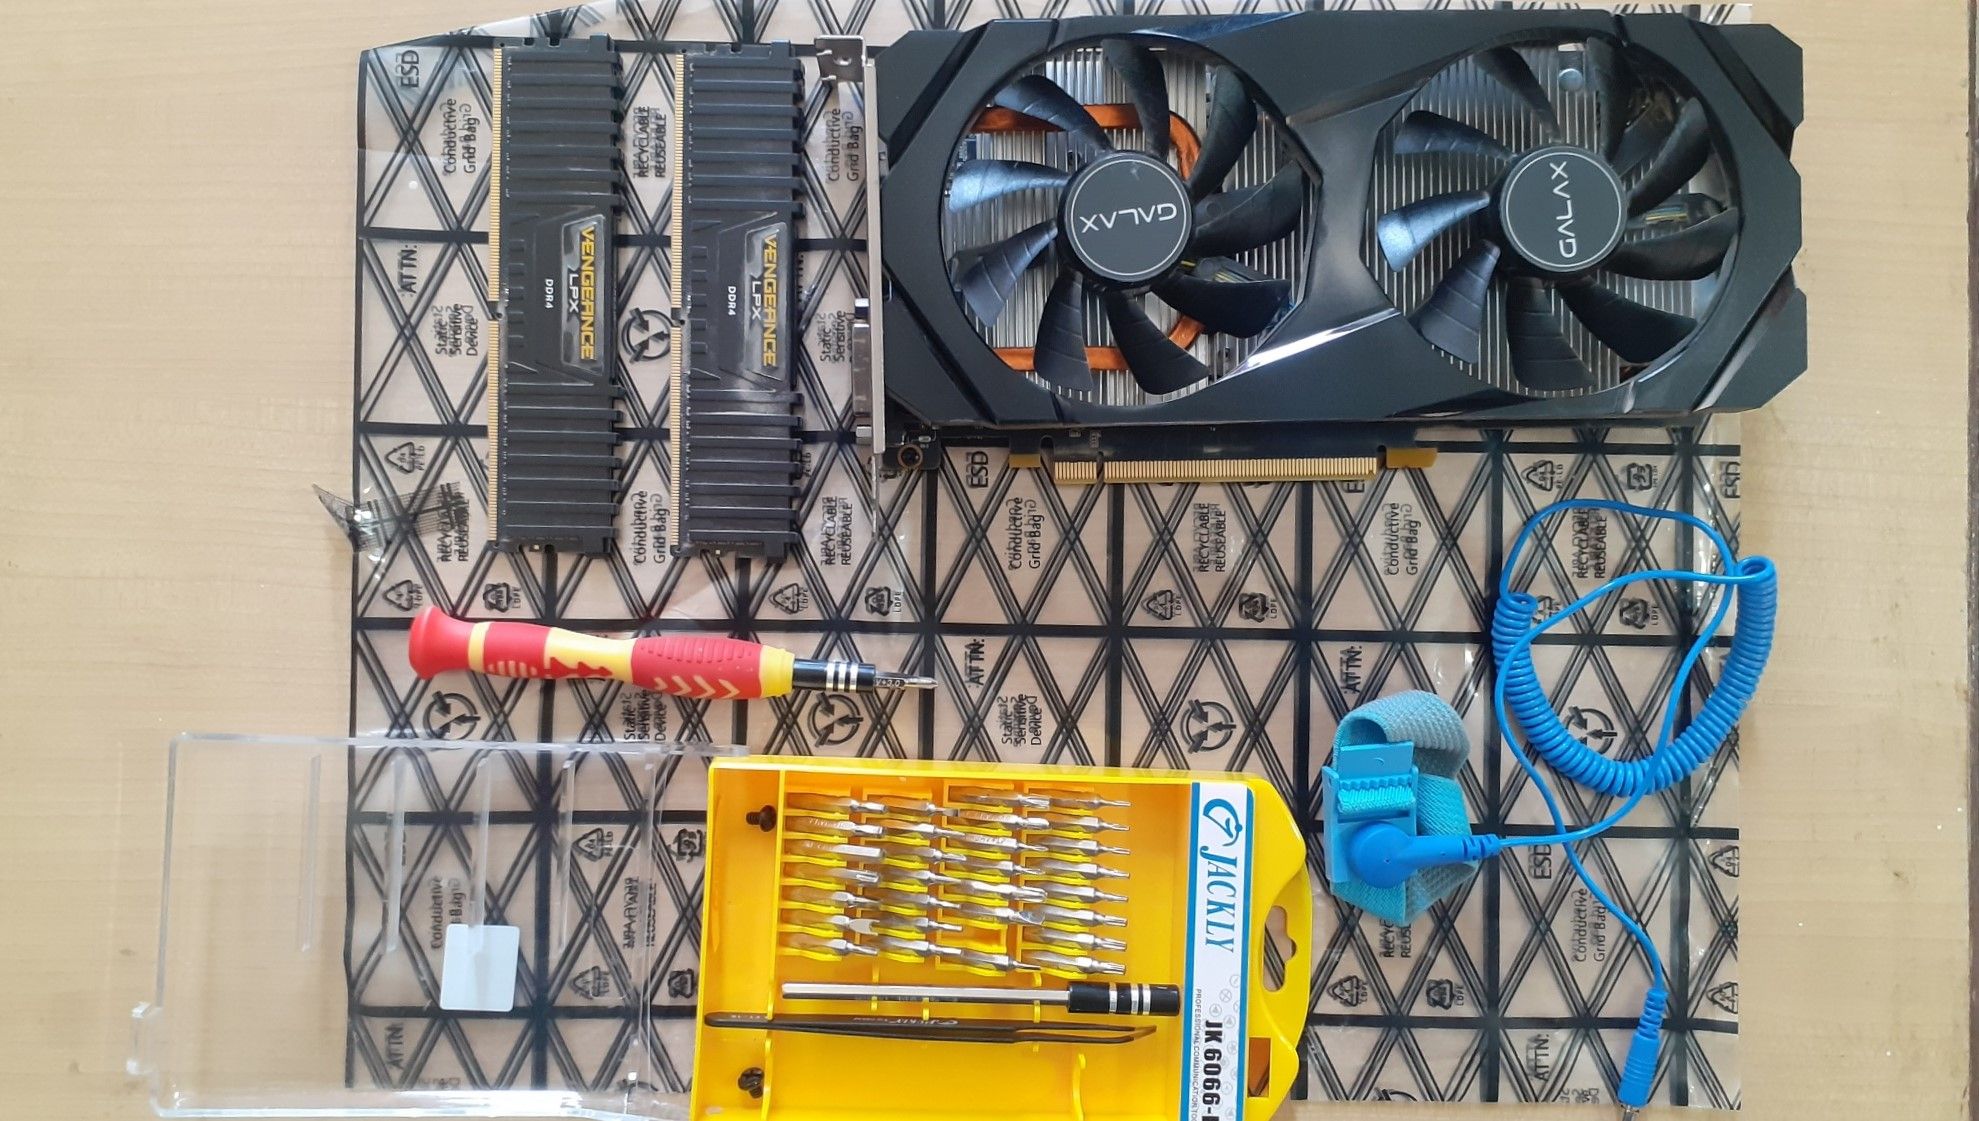 A GPU, RAM sticks, screwdriver kit, and an antistatic wristband lying on a motherboard sleeve.